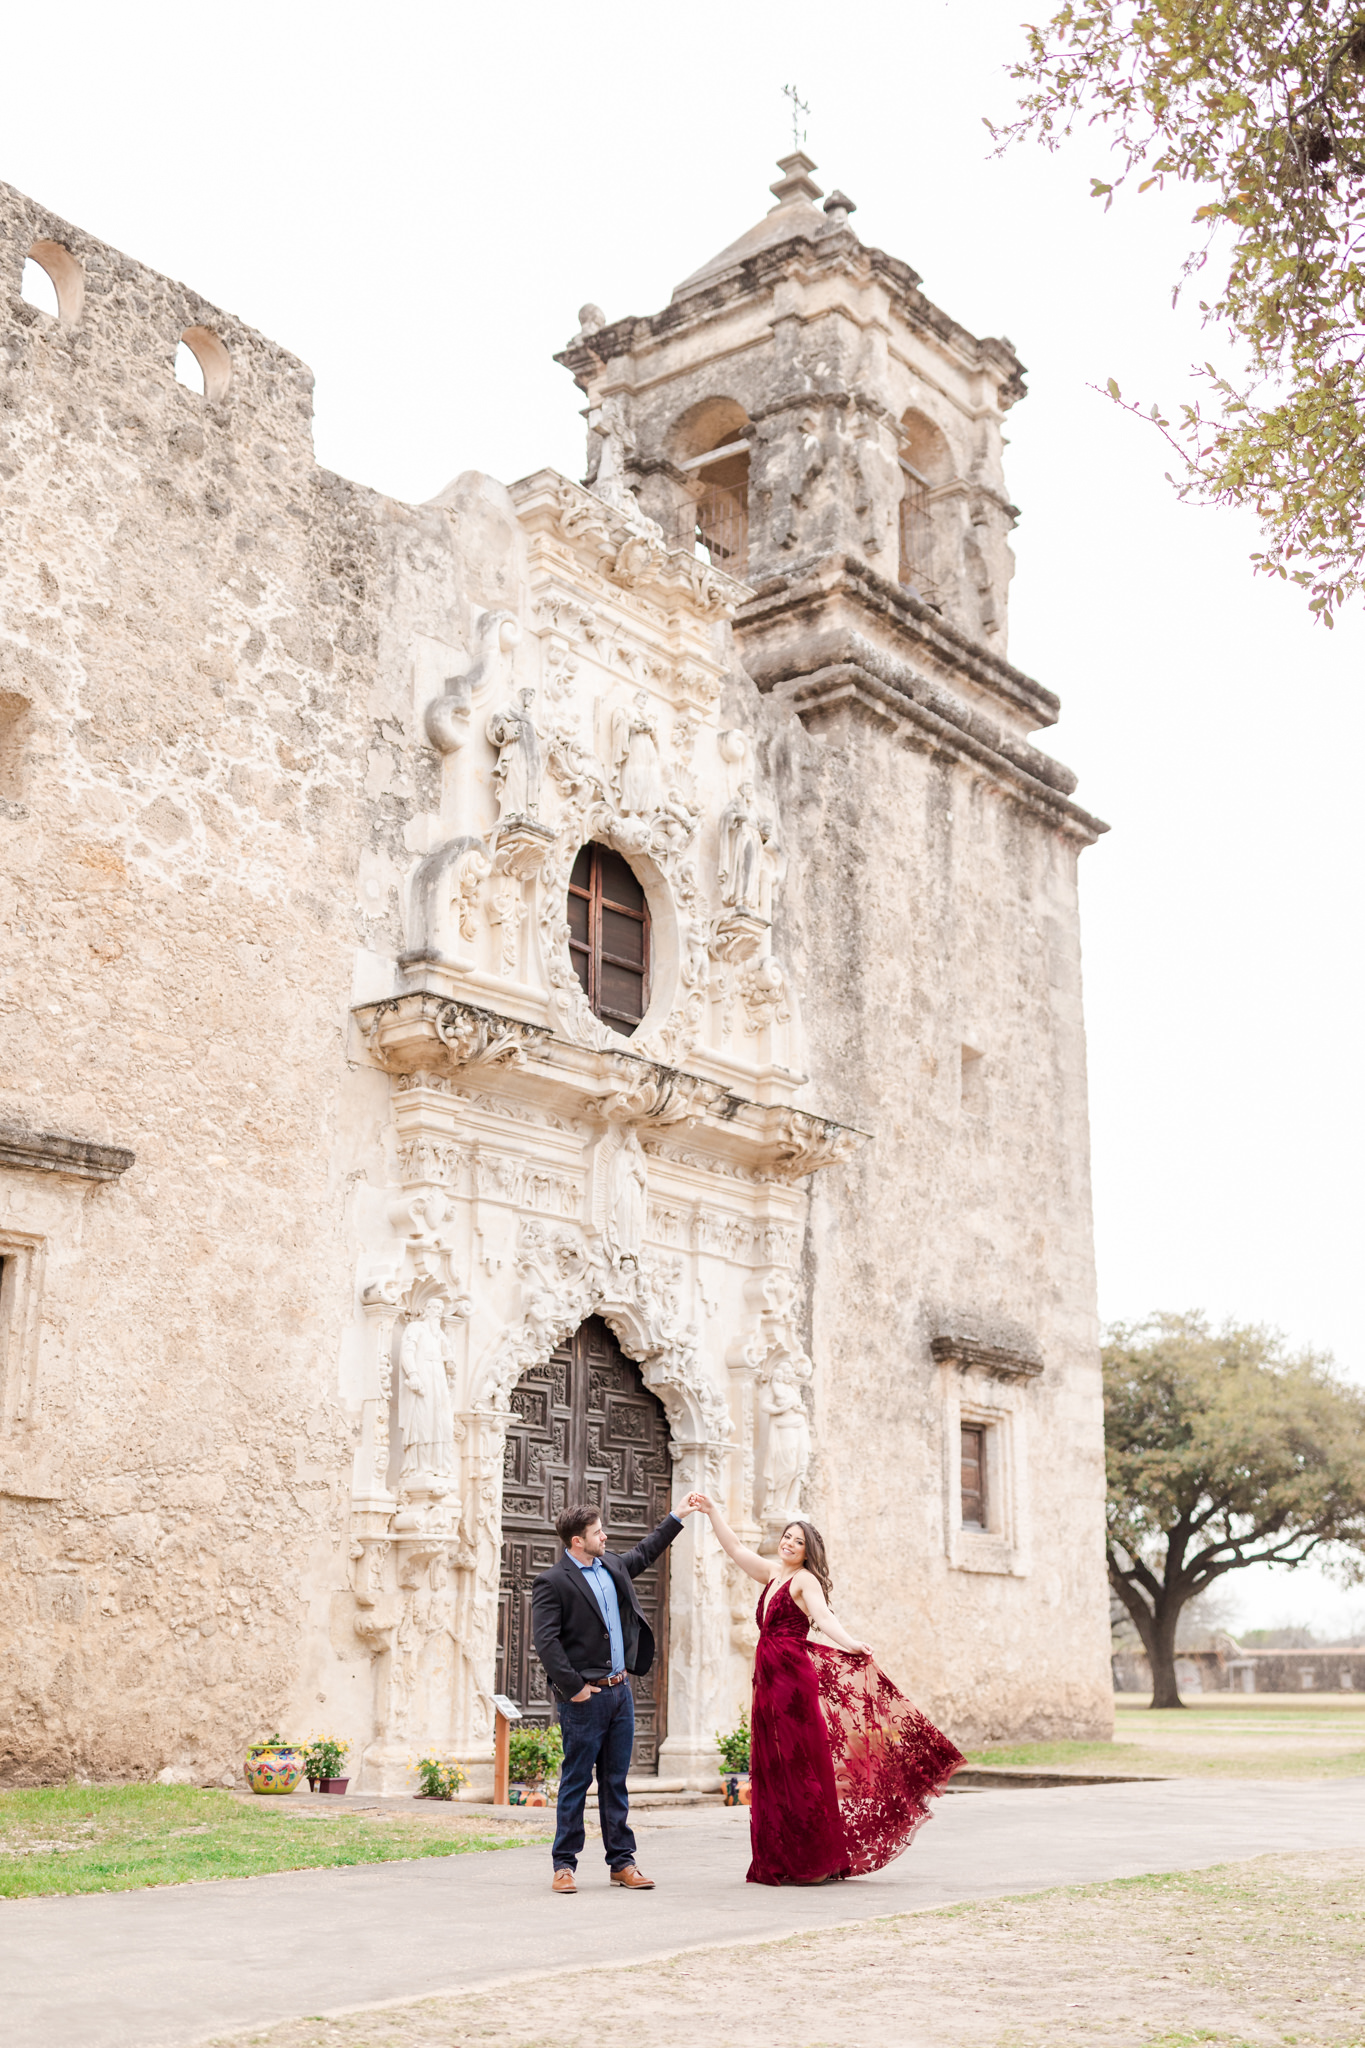 An Engagement Session at Mission San Jose in San Antonio, TX by Dawn Elizabeth Studios, San Antonio Wedding Photographer